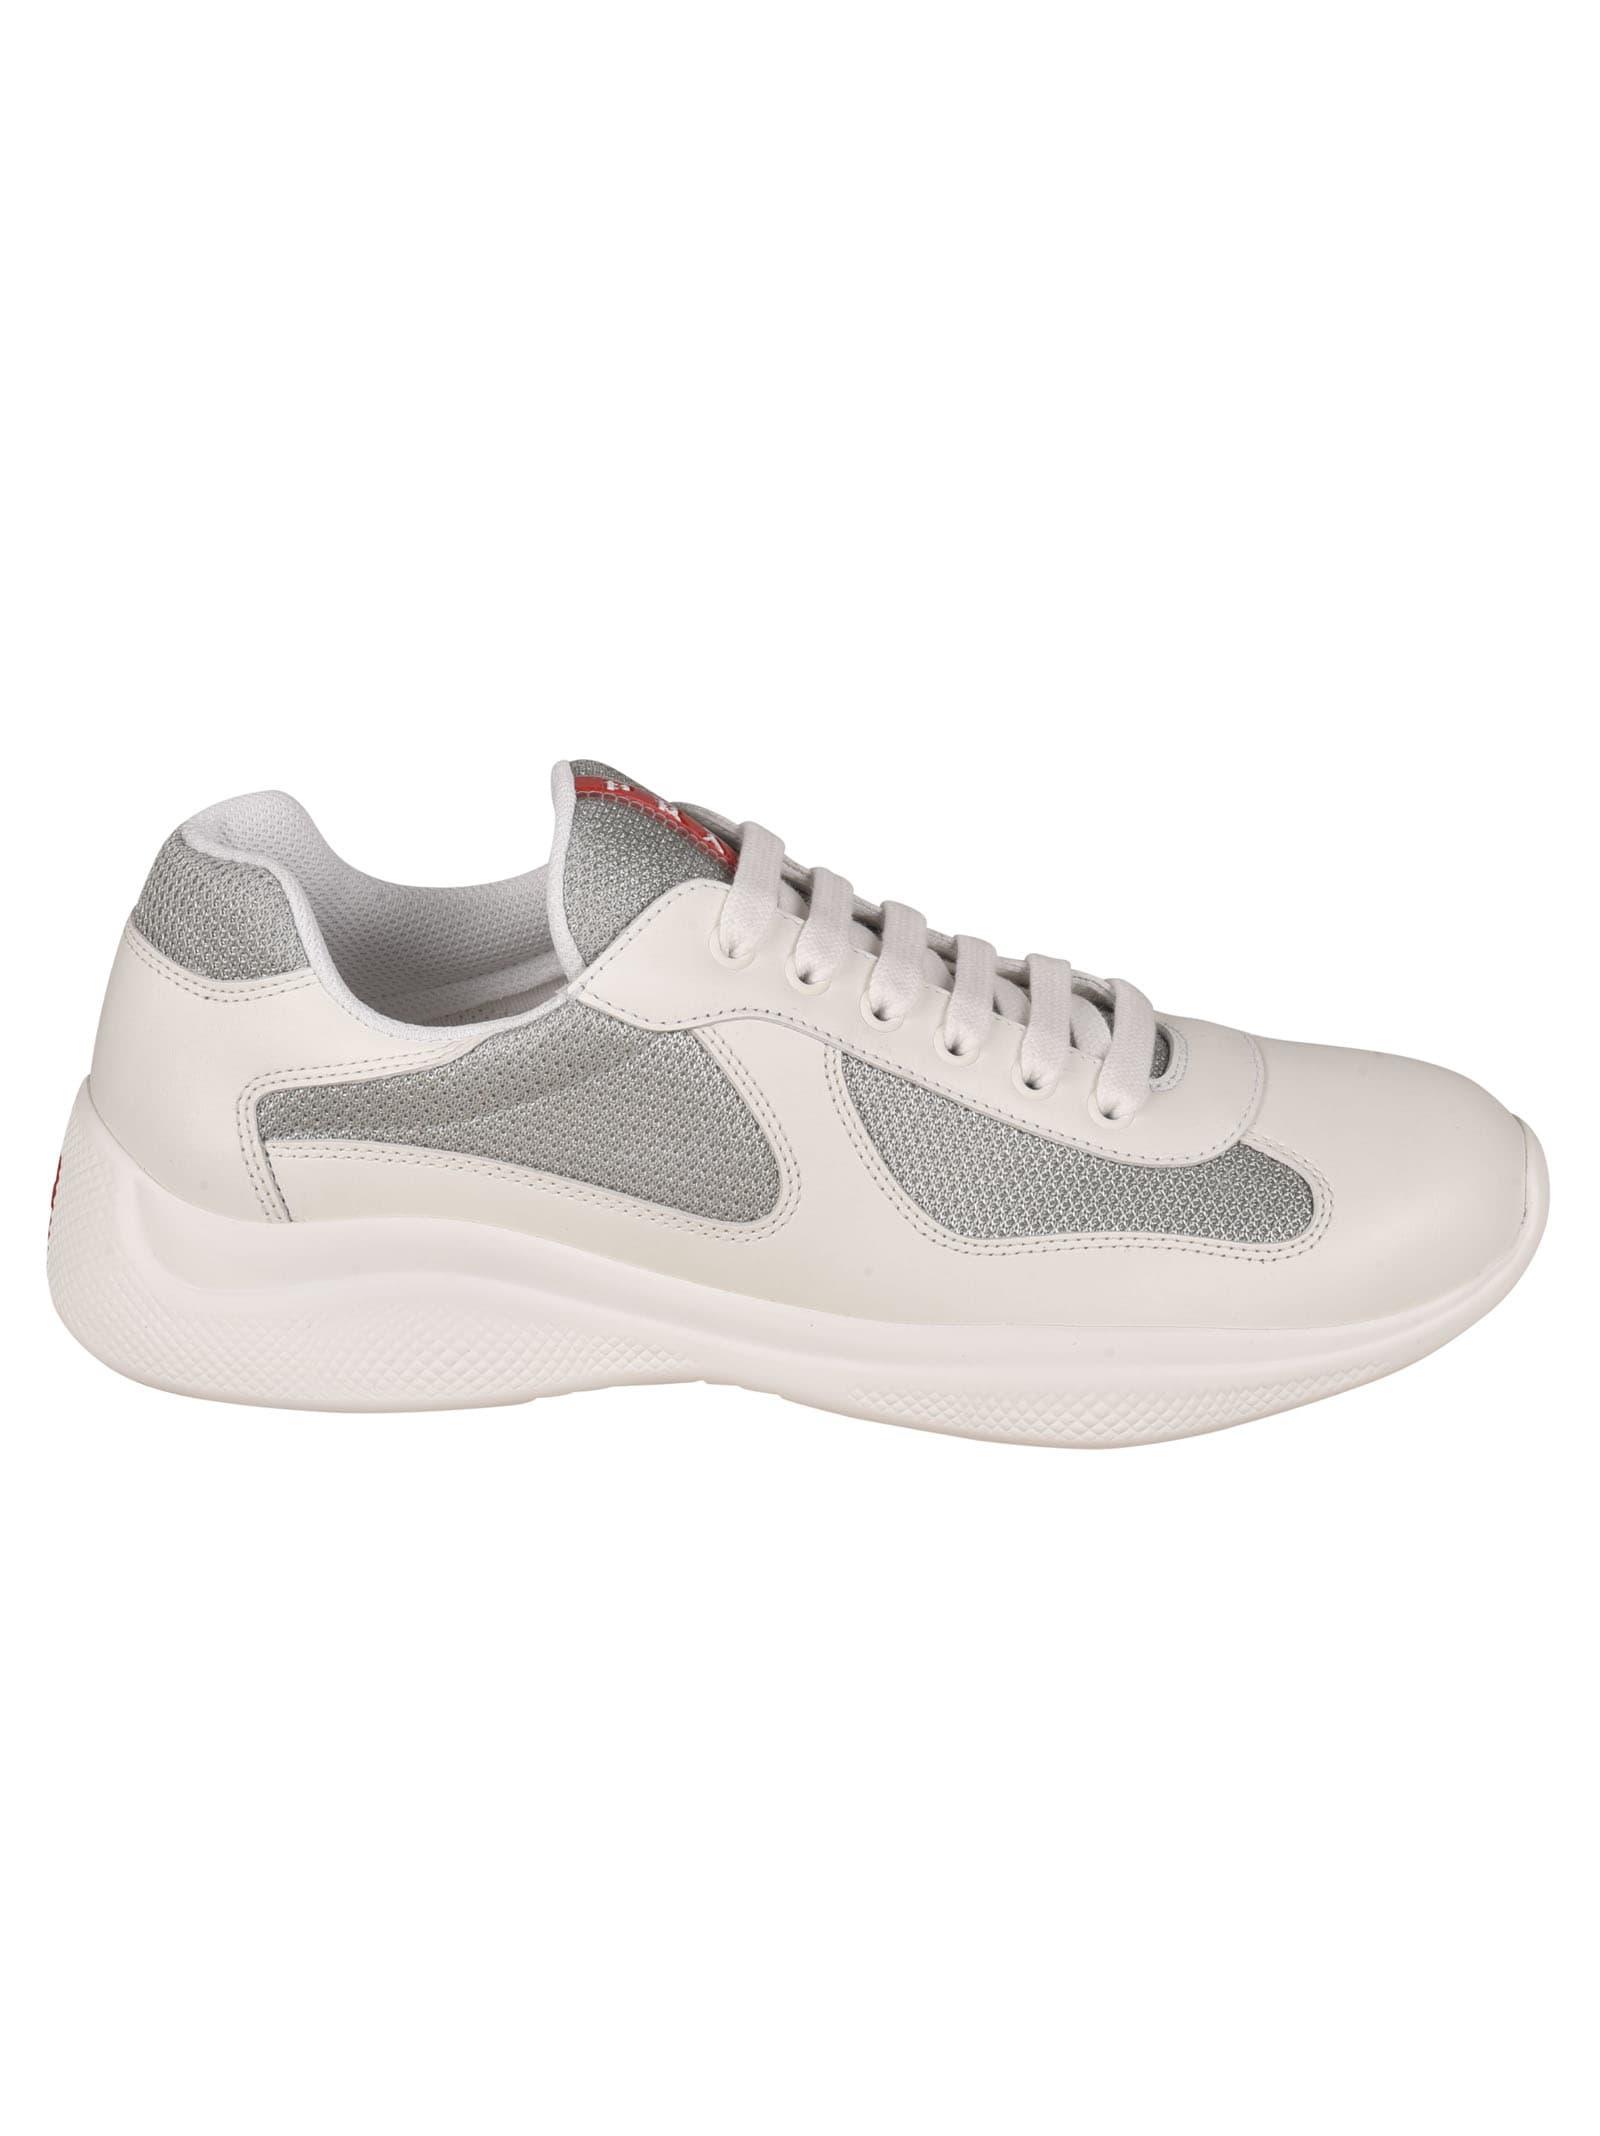 Prada Mesh Sneakers in White/Silver (White) for Men | Lyst